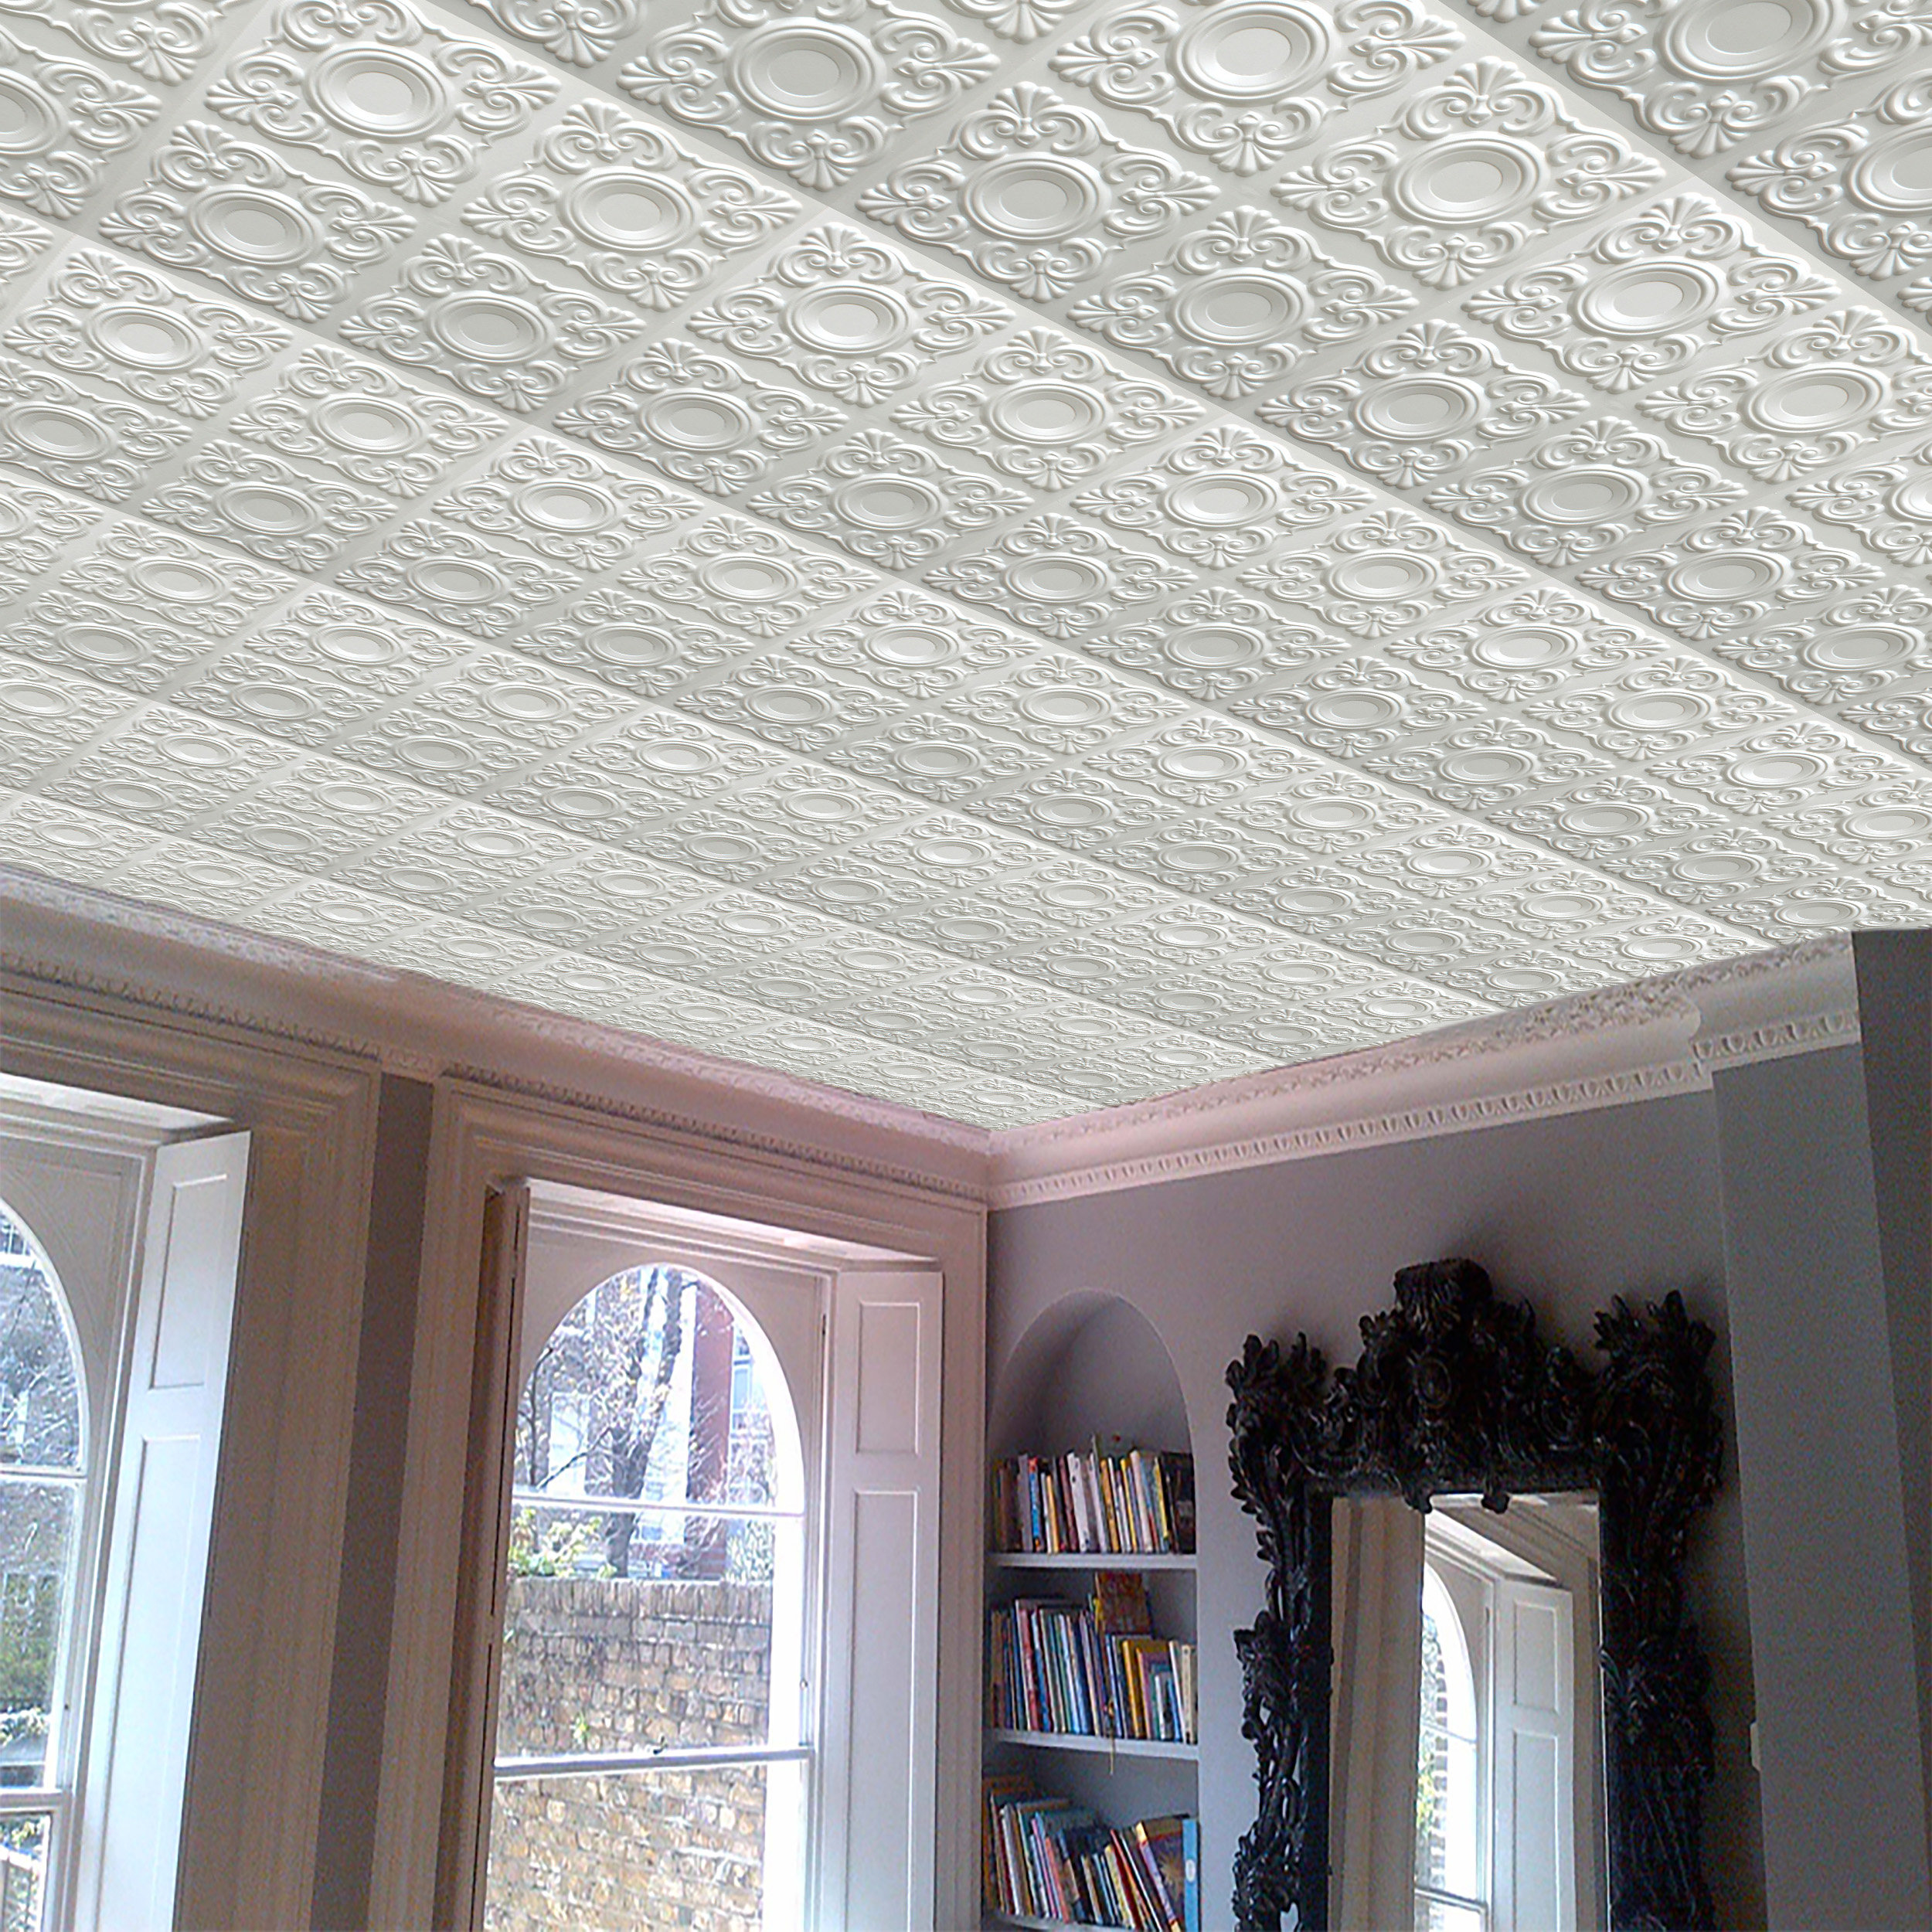 STYRO PRO Adhesive Glue for Styrofoam polystyrene and PVC Ceiling